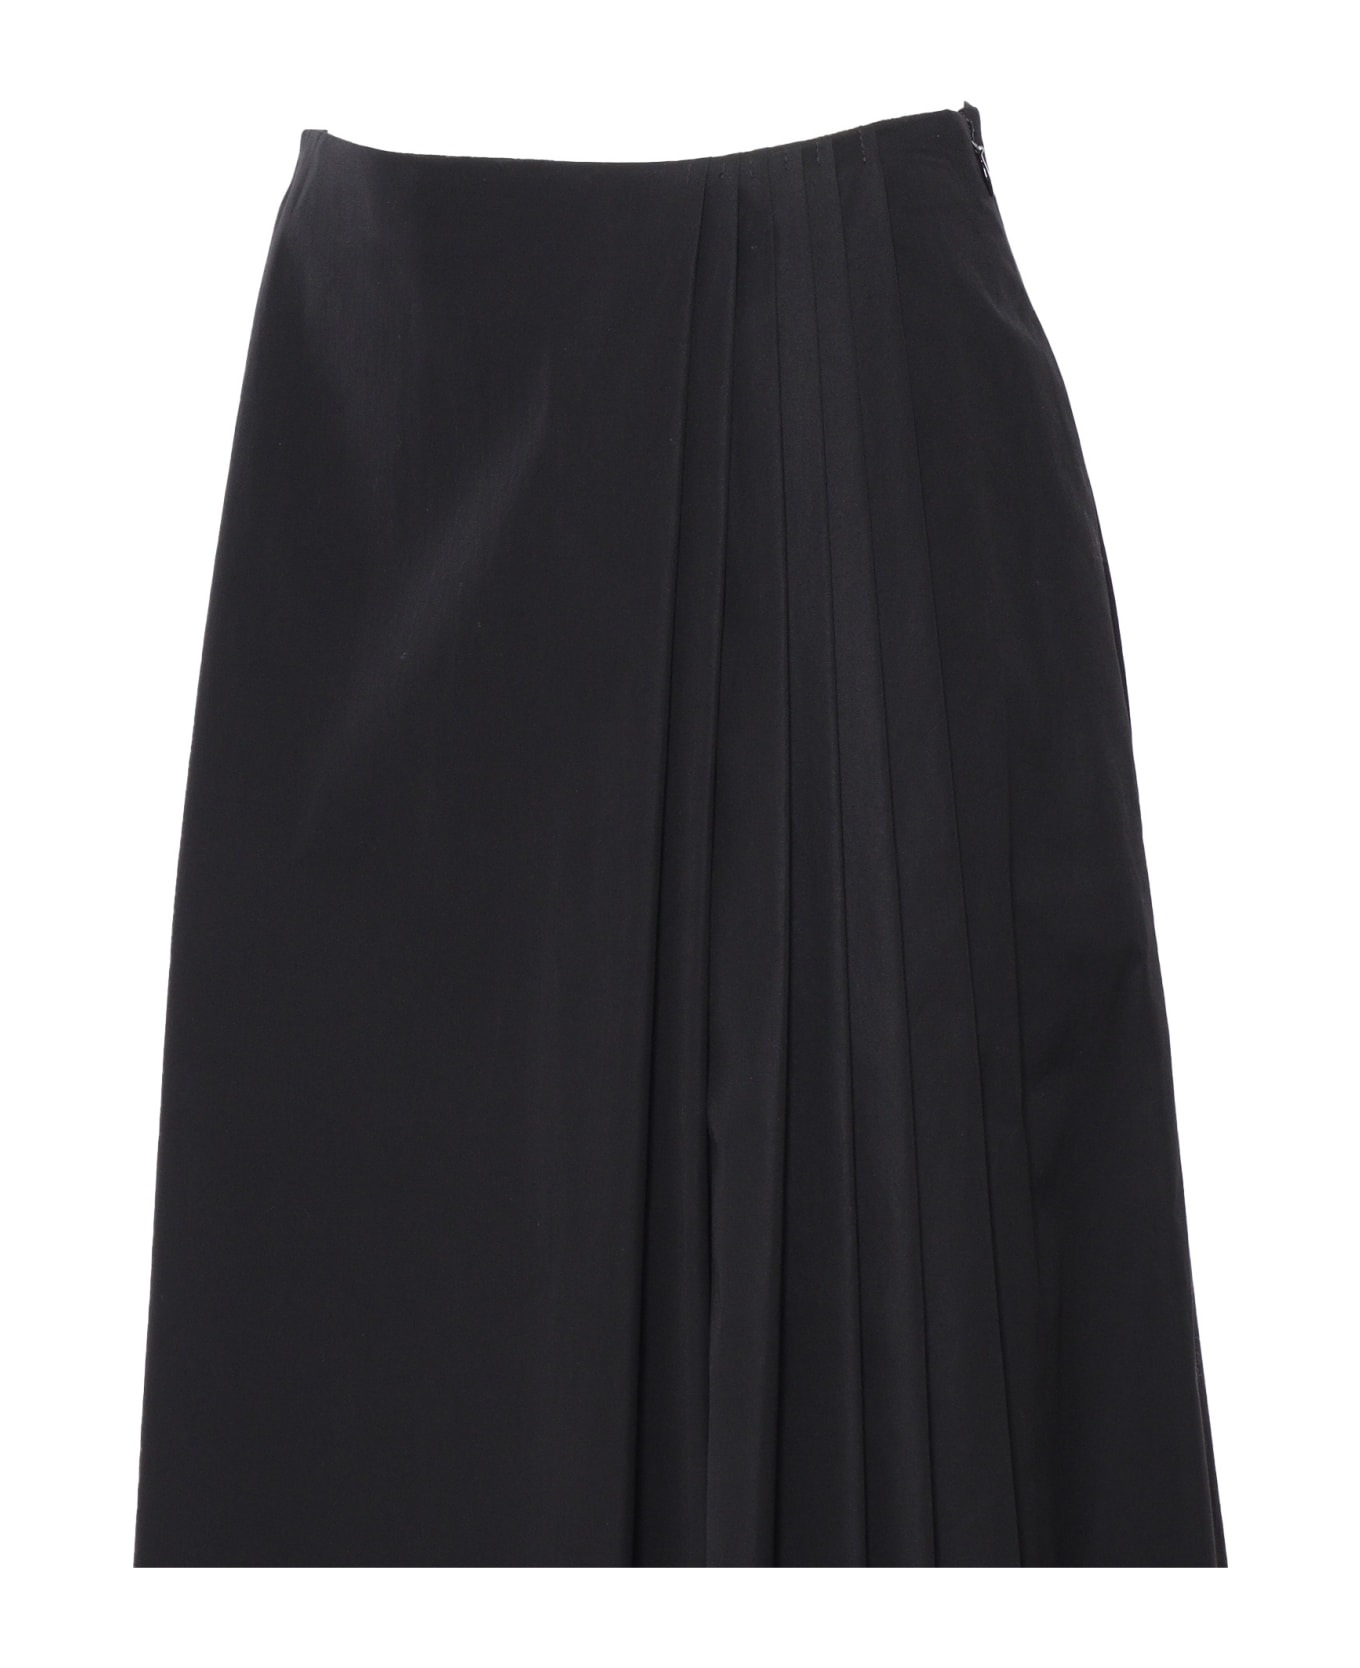 Lorena Antoniazzi Black Skirt With Pleats - BLACK